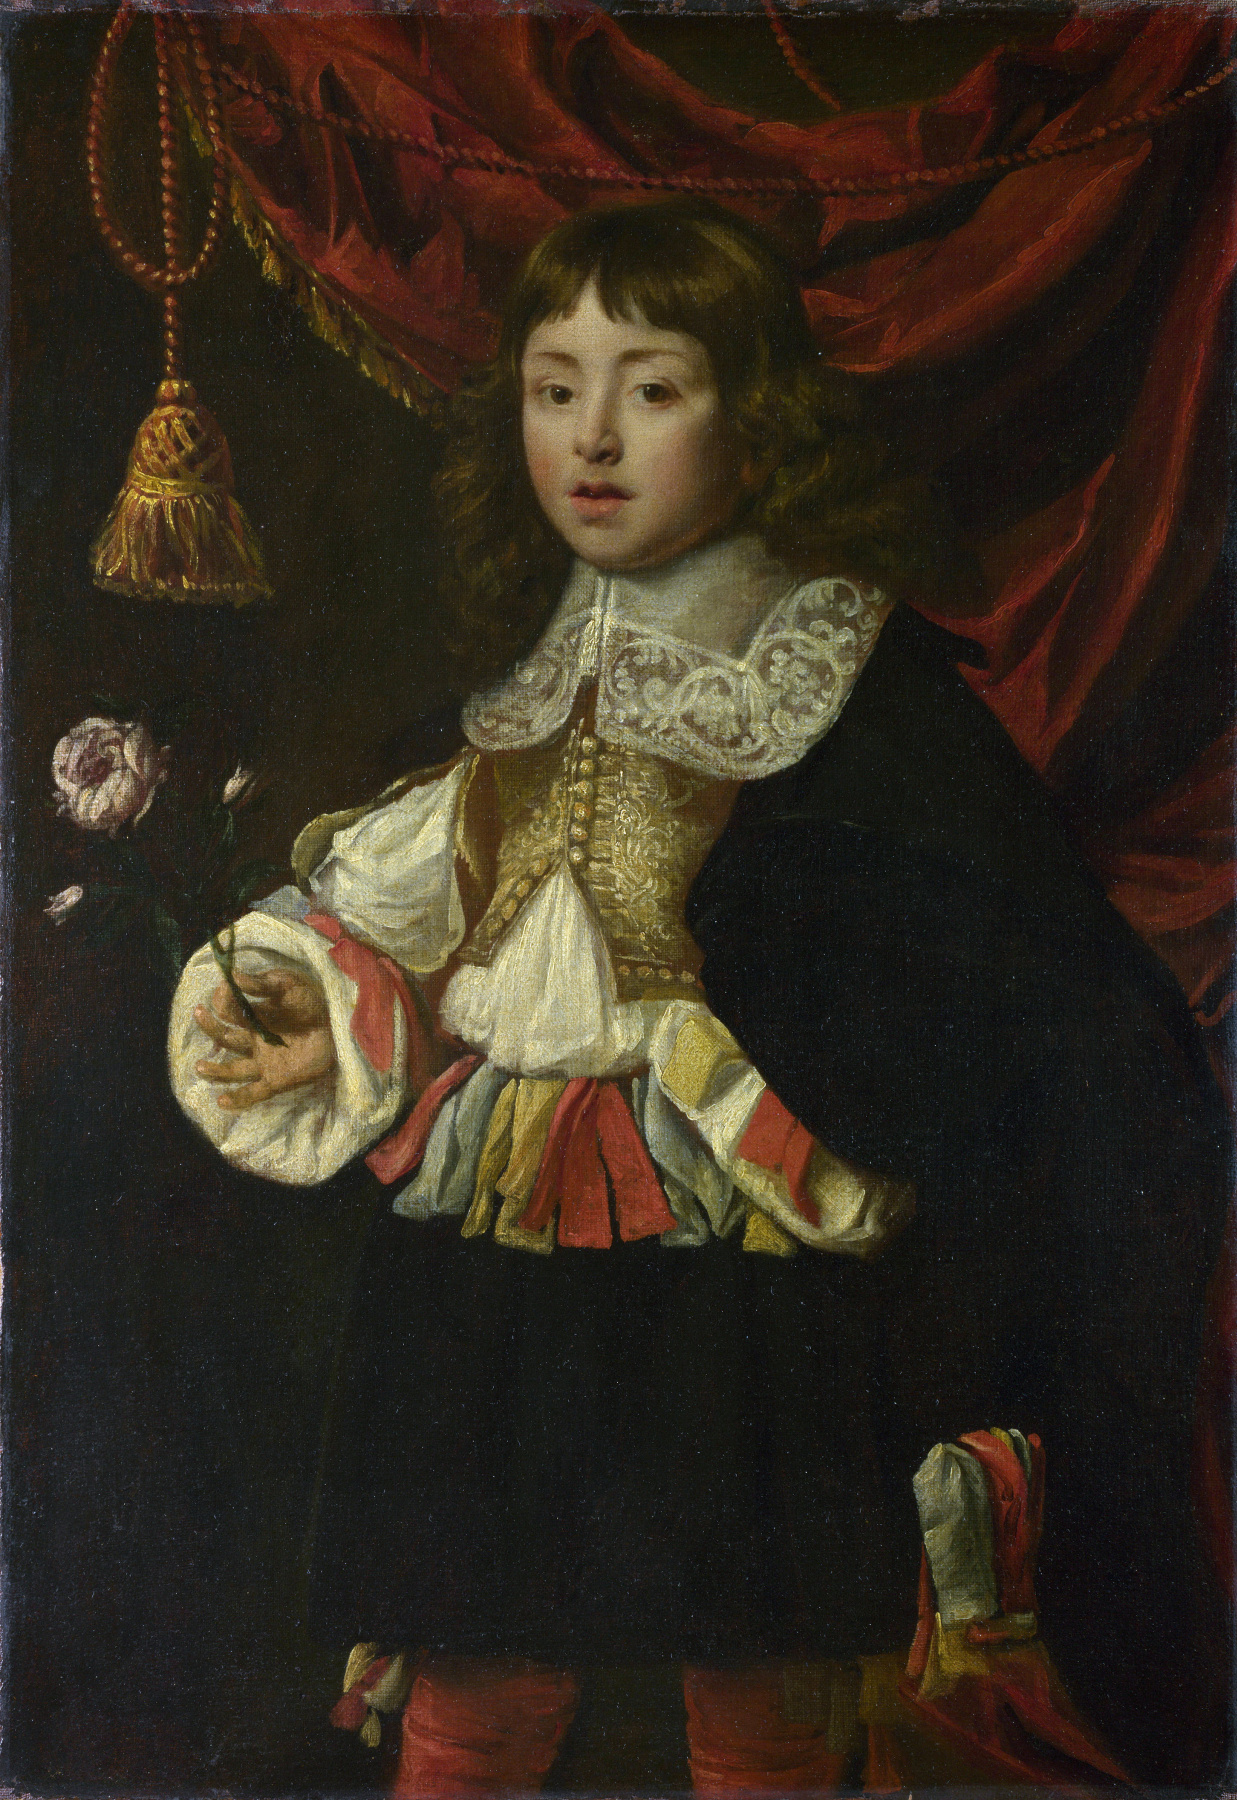 Flemish. Portrait of a boy holding a rose